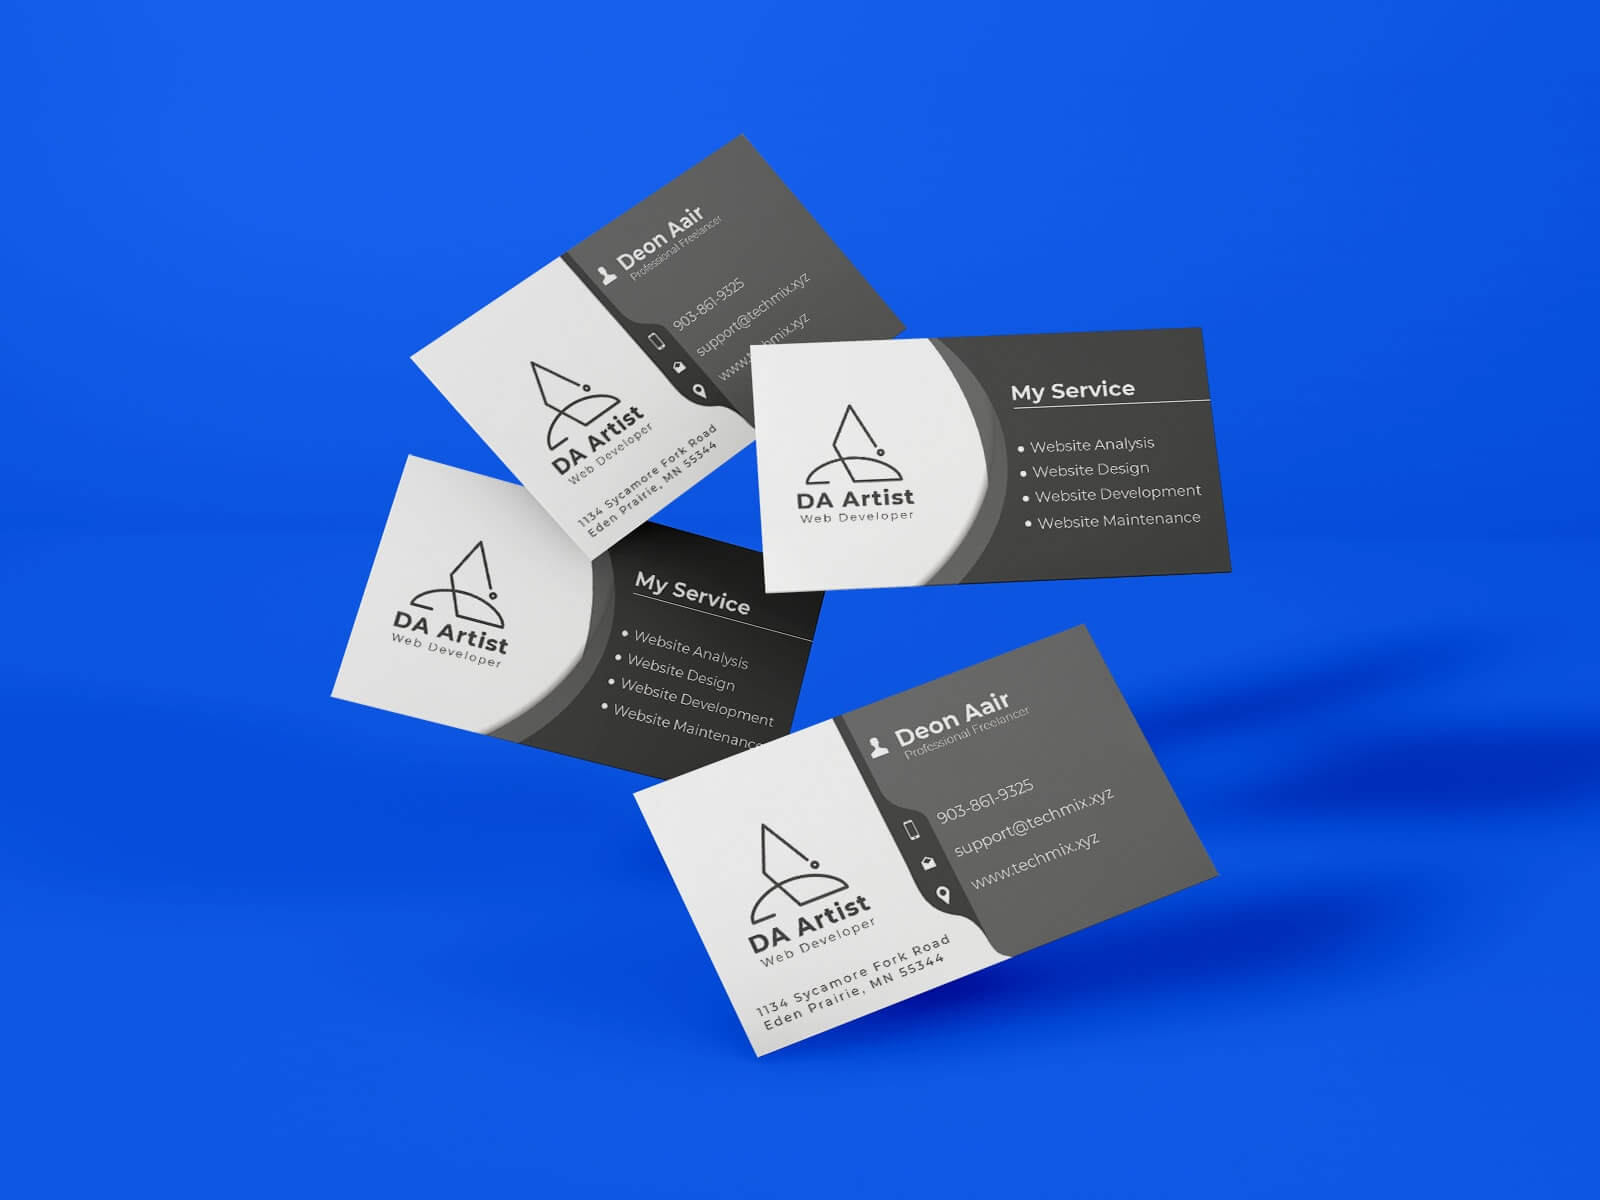 Freelancer Business Cards 2020 | Techmix Throughout Freelance Business Card Template